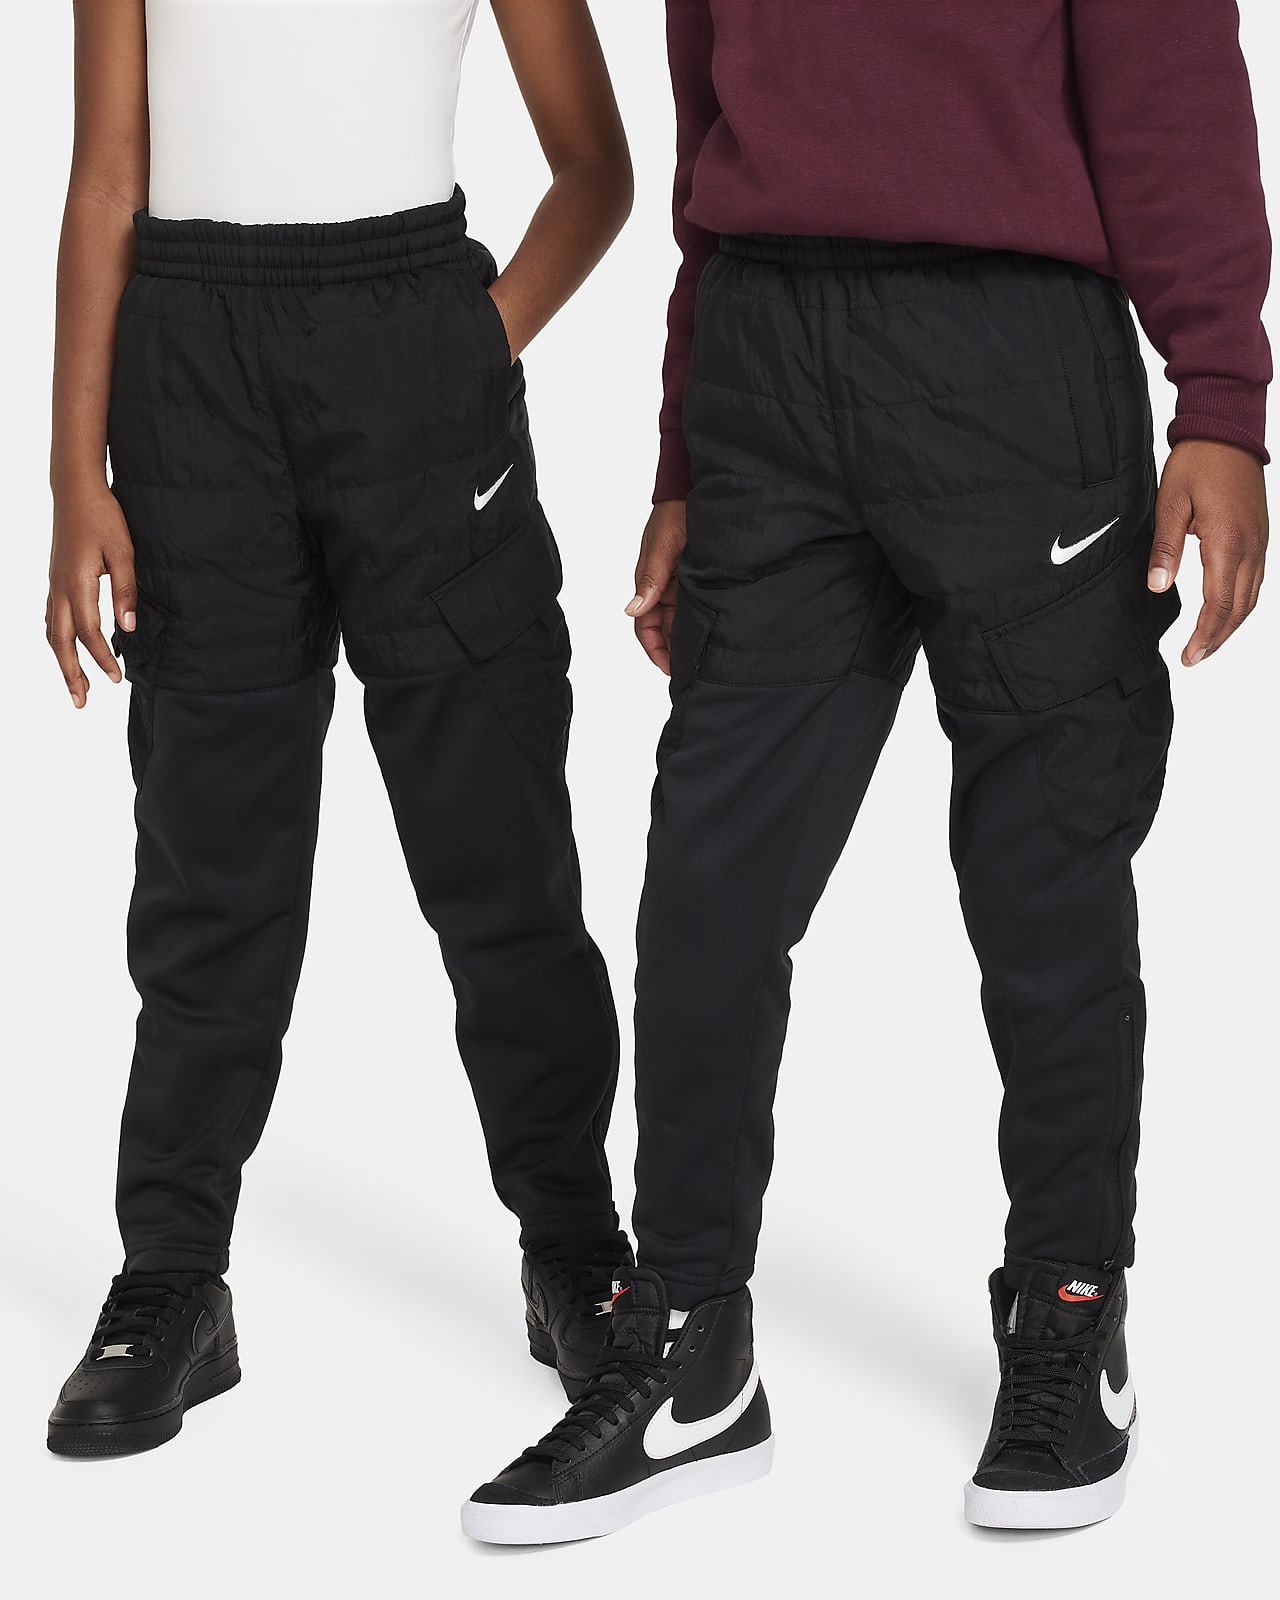 Nike Therma-Fit Track Pants Men's M Black Gray Adjustable Ankle Fleece  Lined | eBay